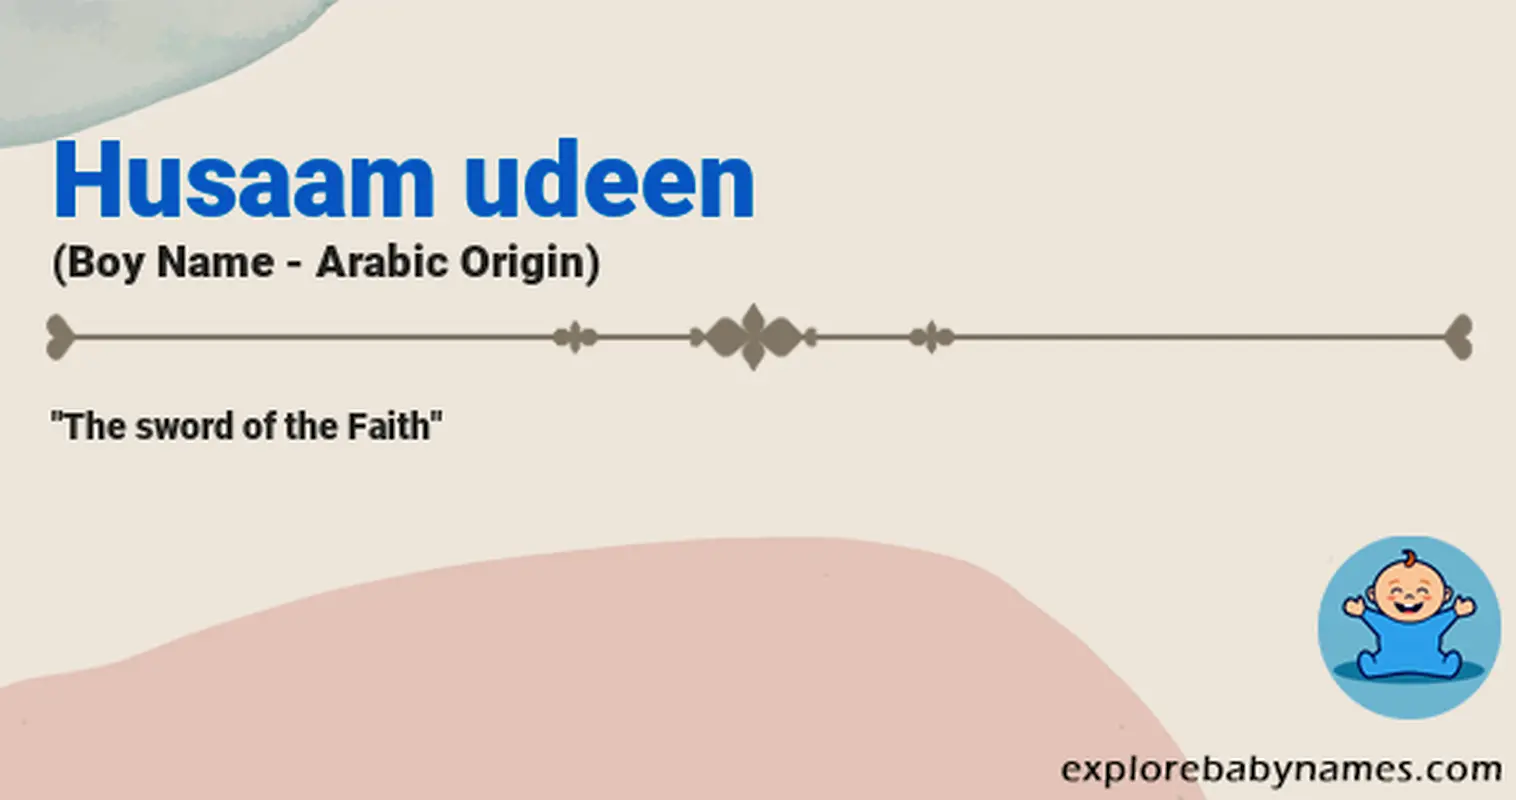 Meaning of Husaam udeen